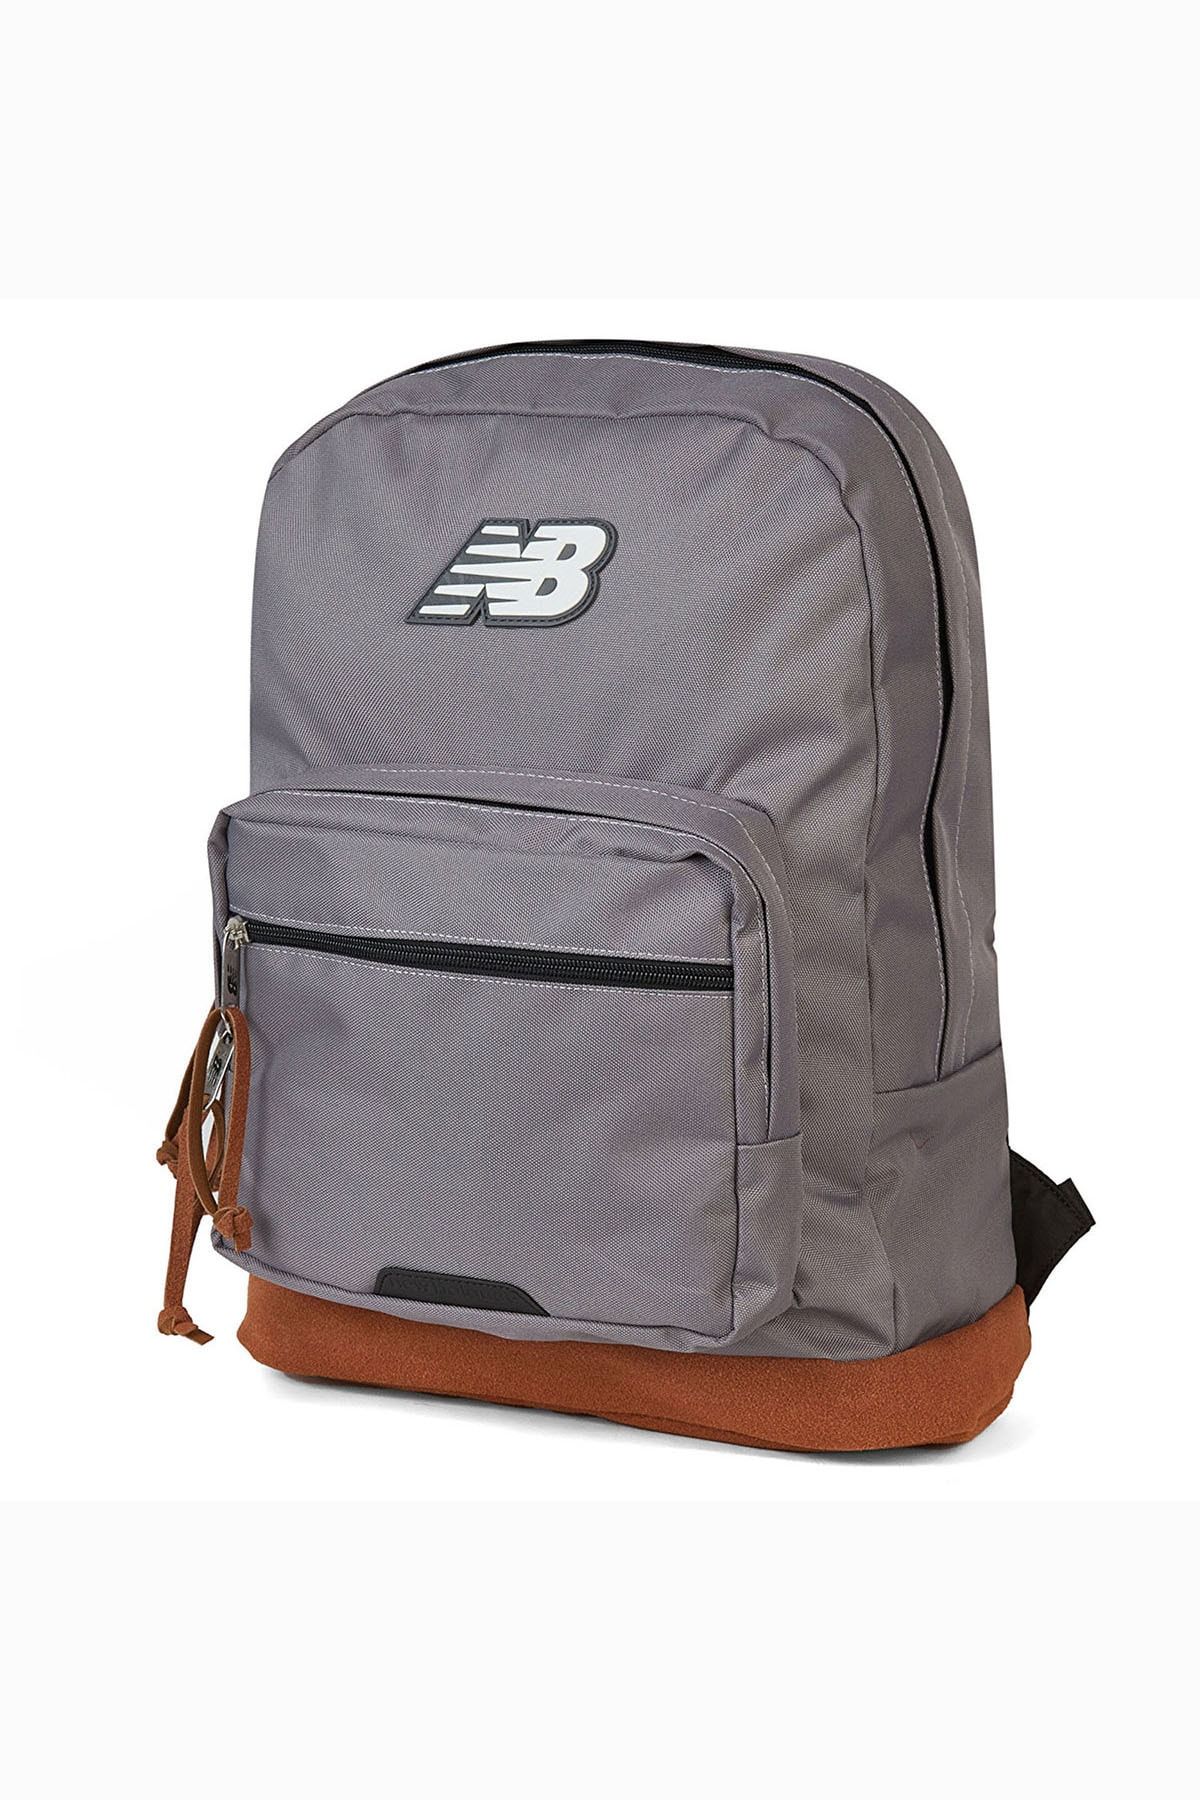 New Balance Çanta Nb Backpack Anb3202-ag